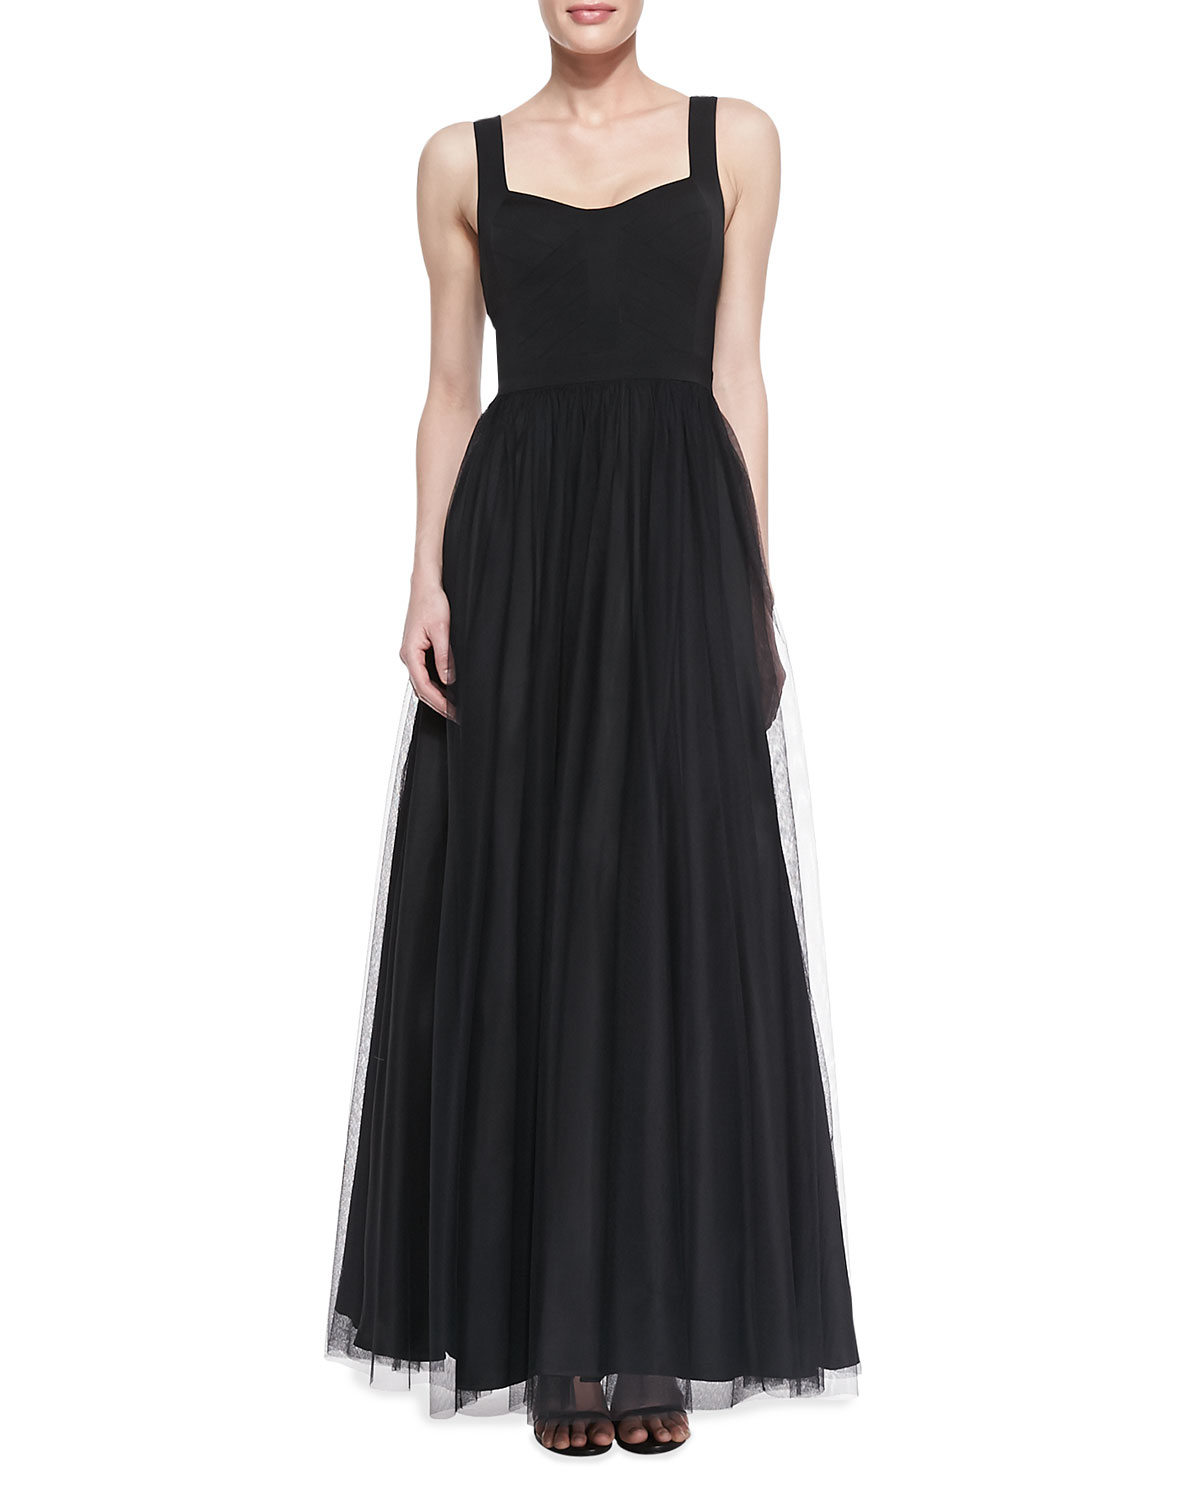 Lyst - Aidan Mattox Sleeveless Sweetheart Tulle Ball Gown in Black